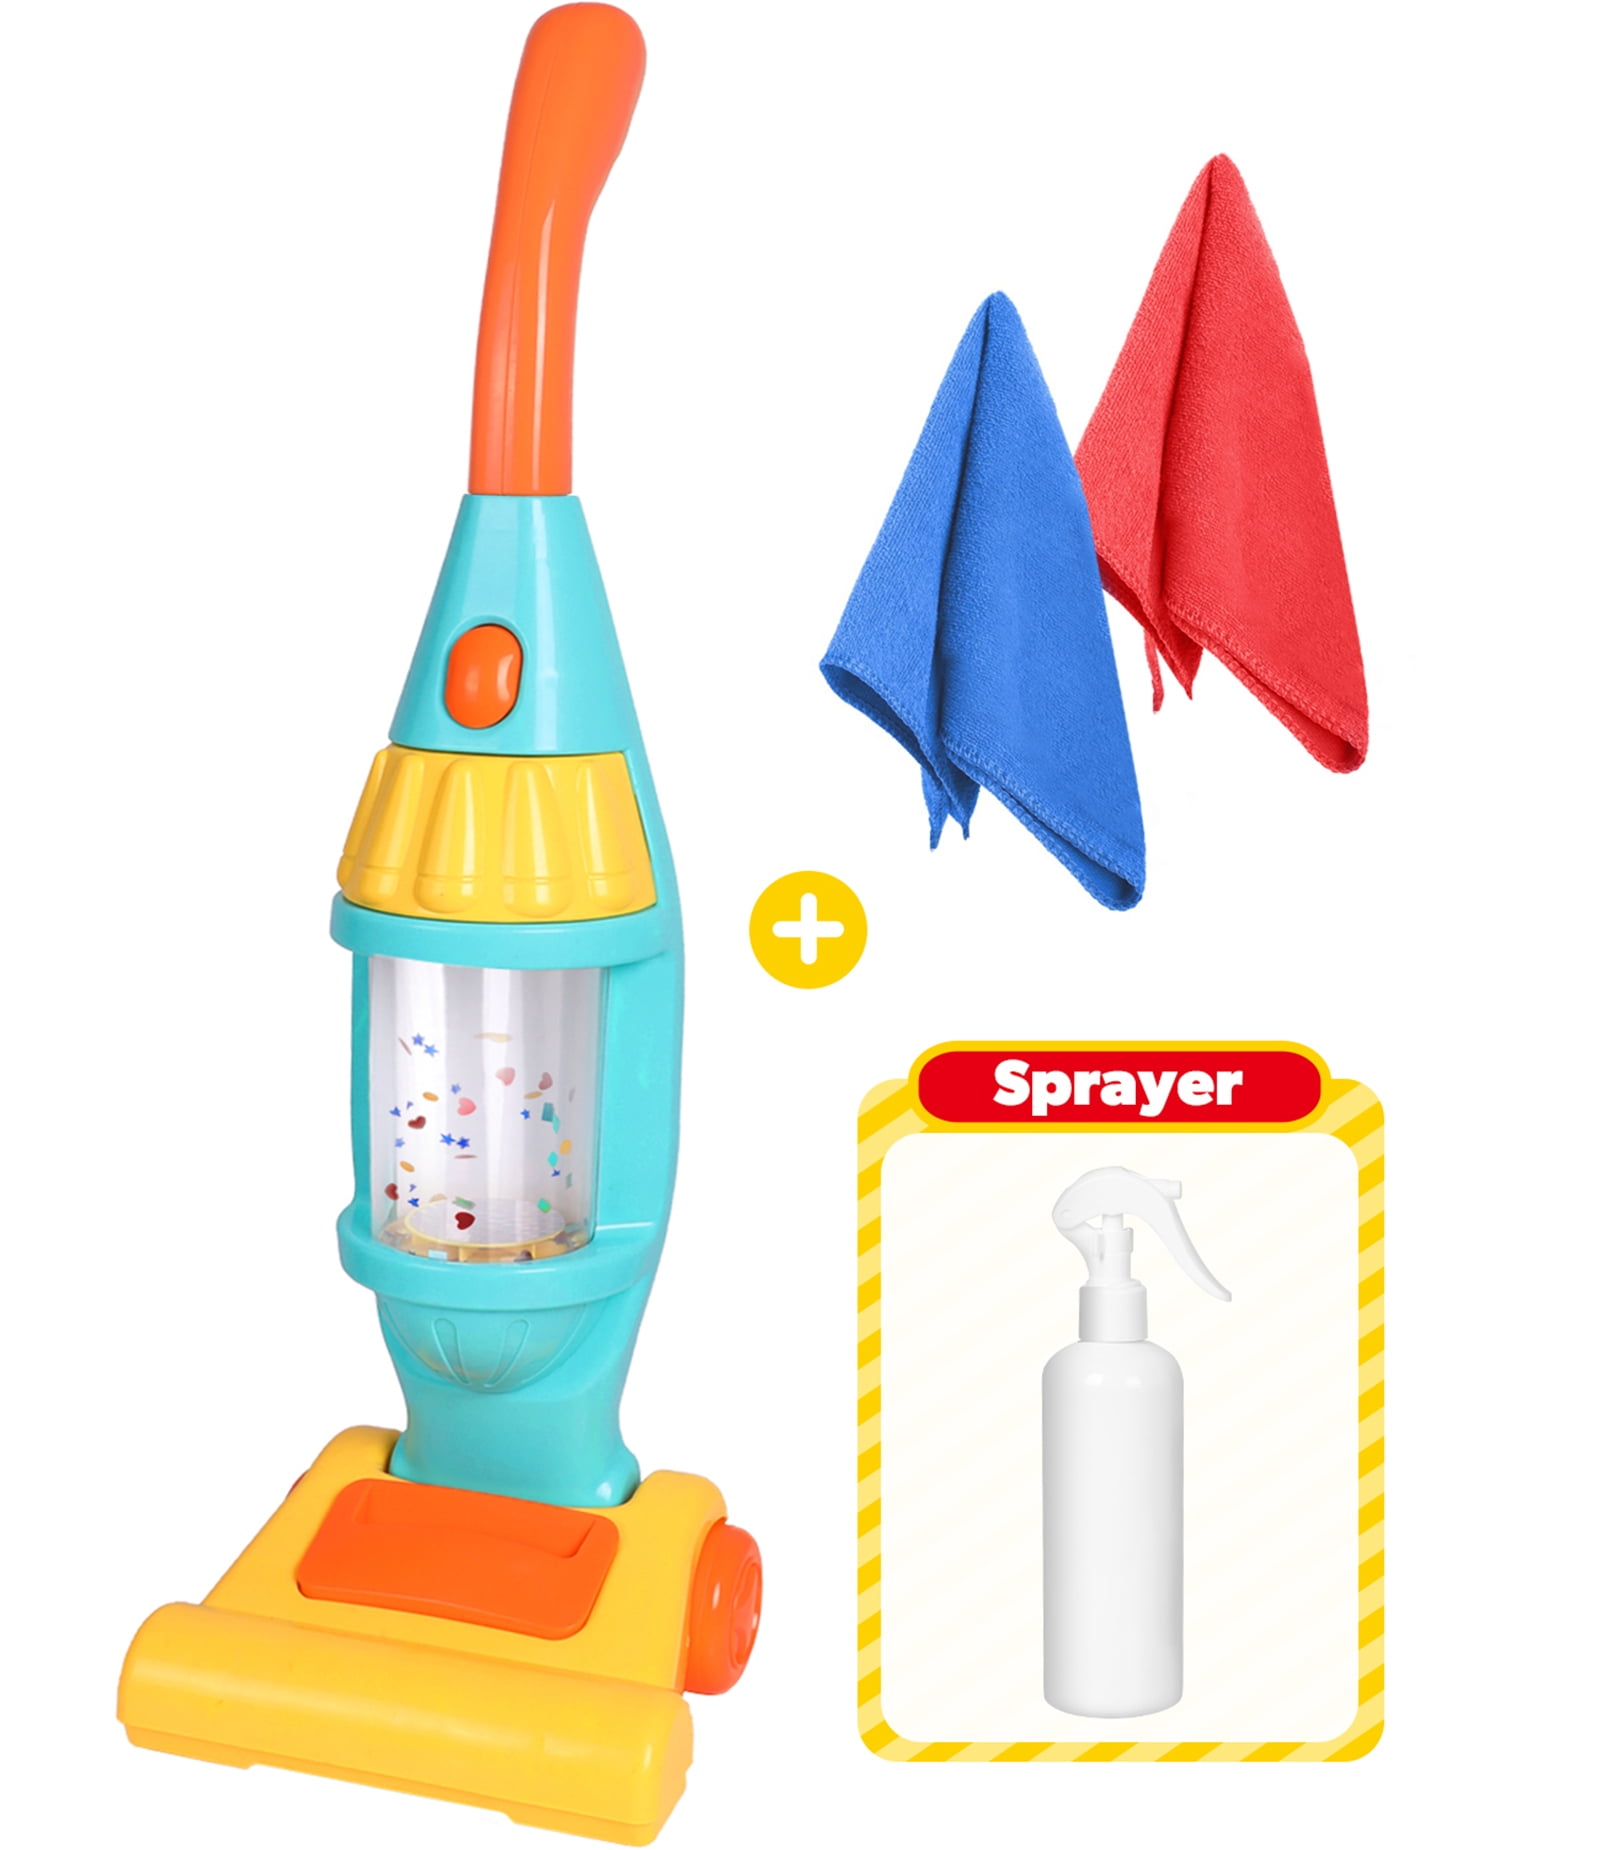 PlayGo Stick Vacuum Cleaner Playhouse 